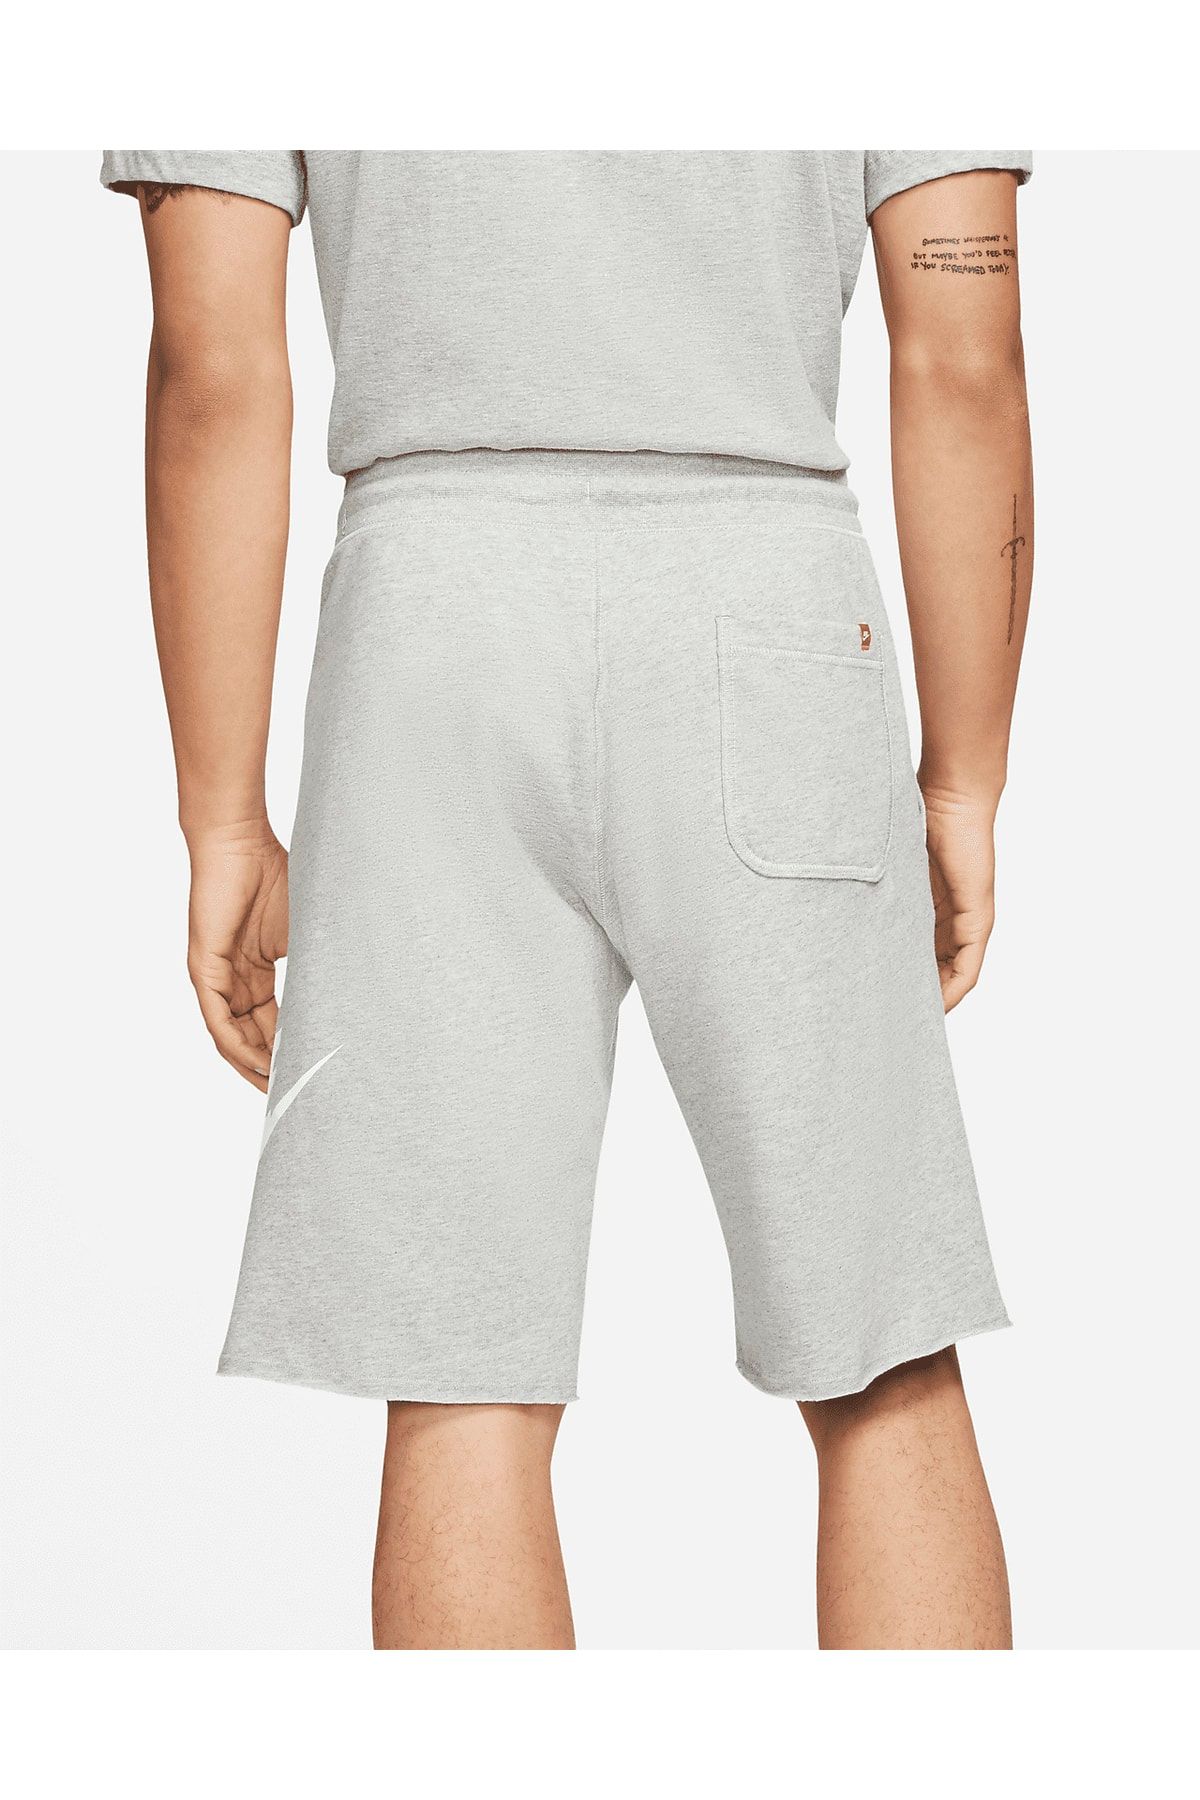 Nike Sports Shorts - Gray - Normal Waist - Trendyol